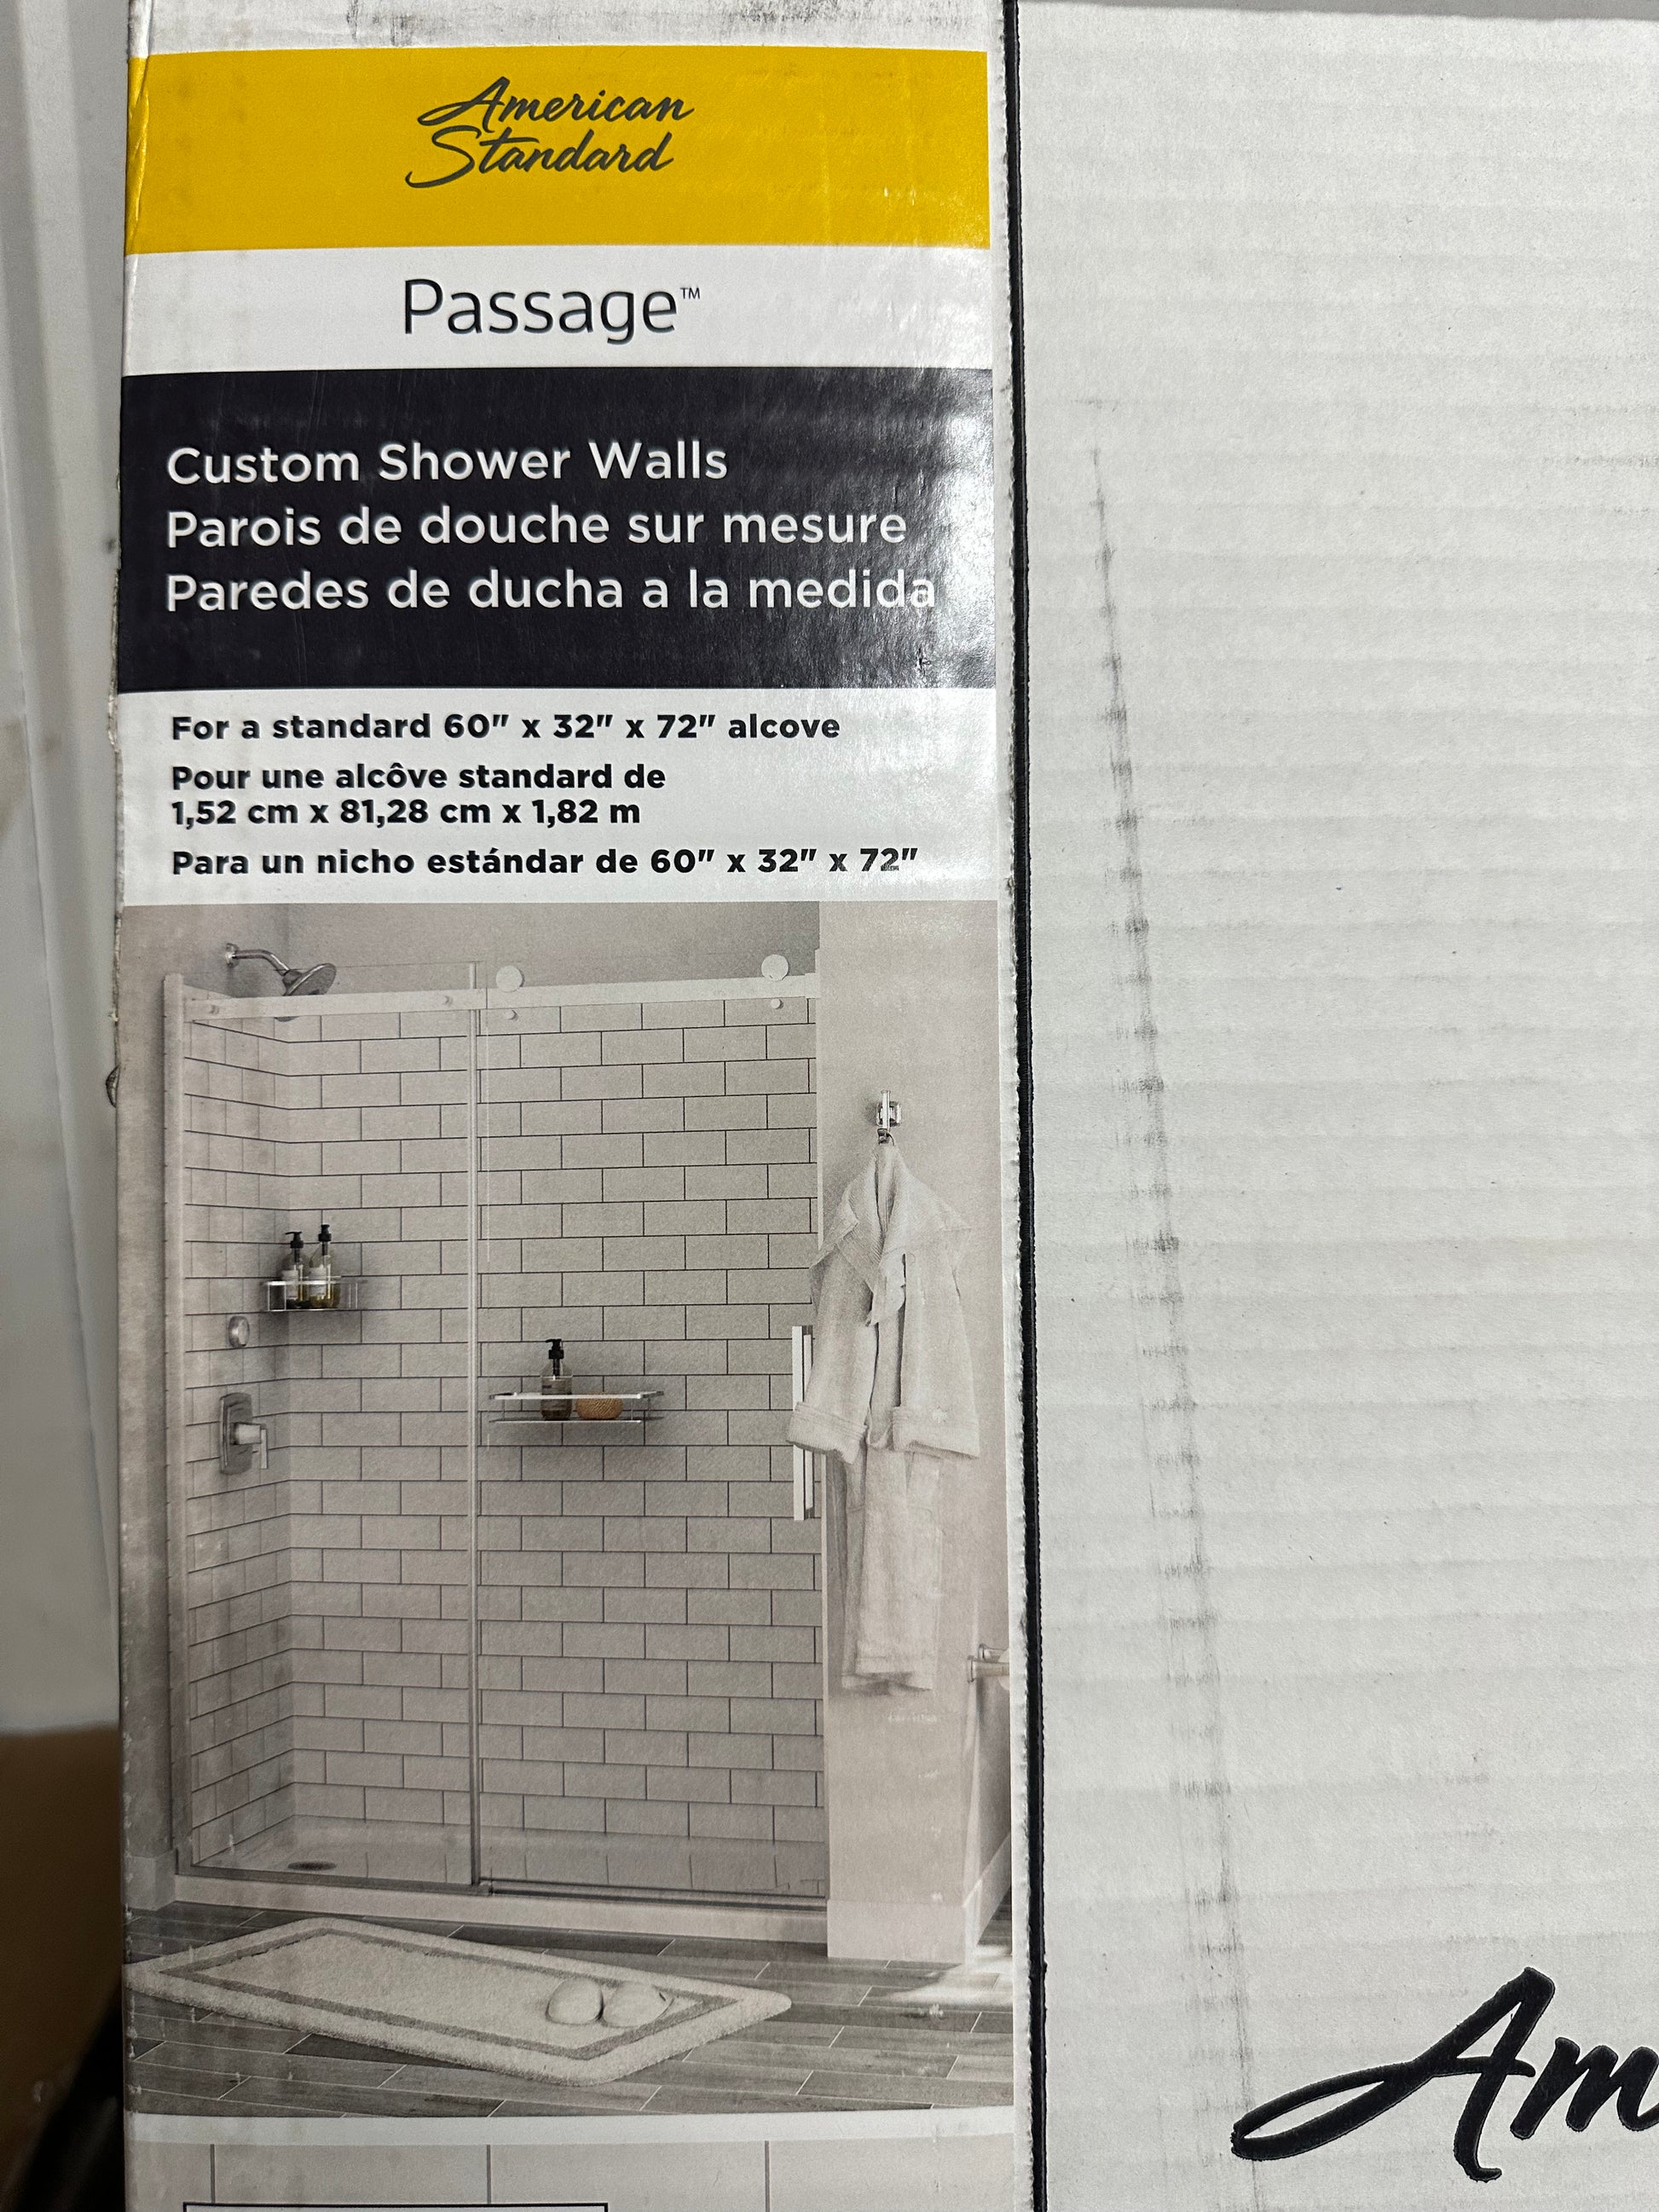 American Standard Passage Rectangular Shower Shelf in Brushed Metal